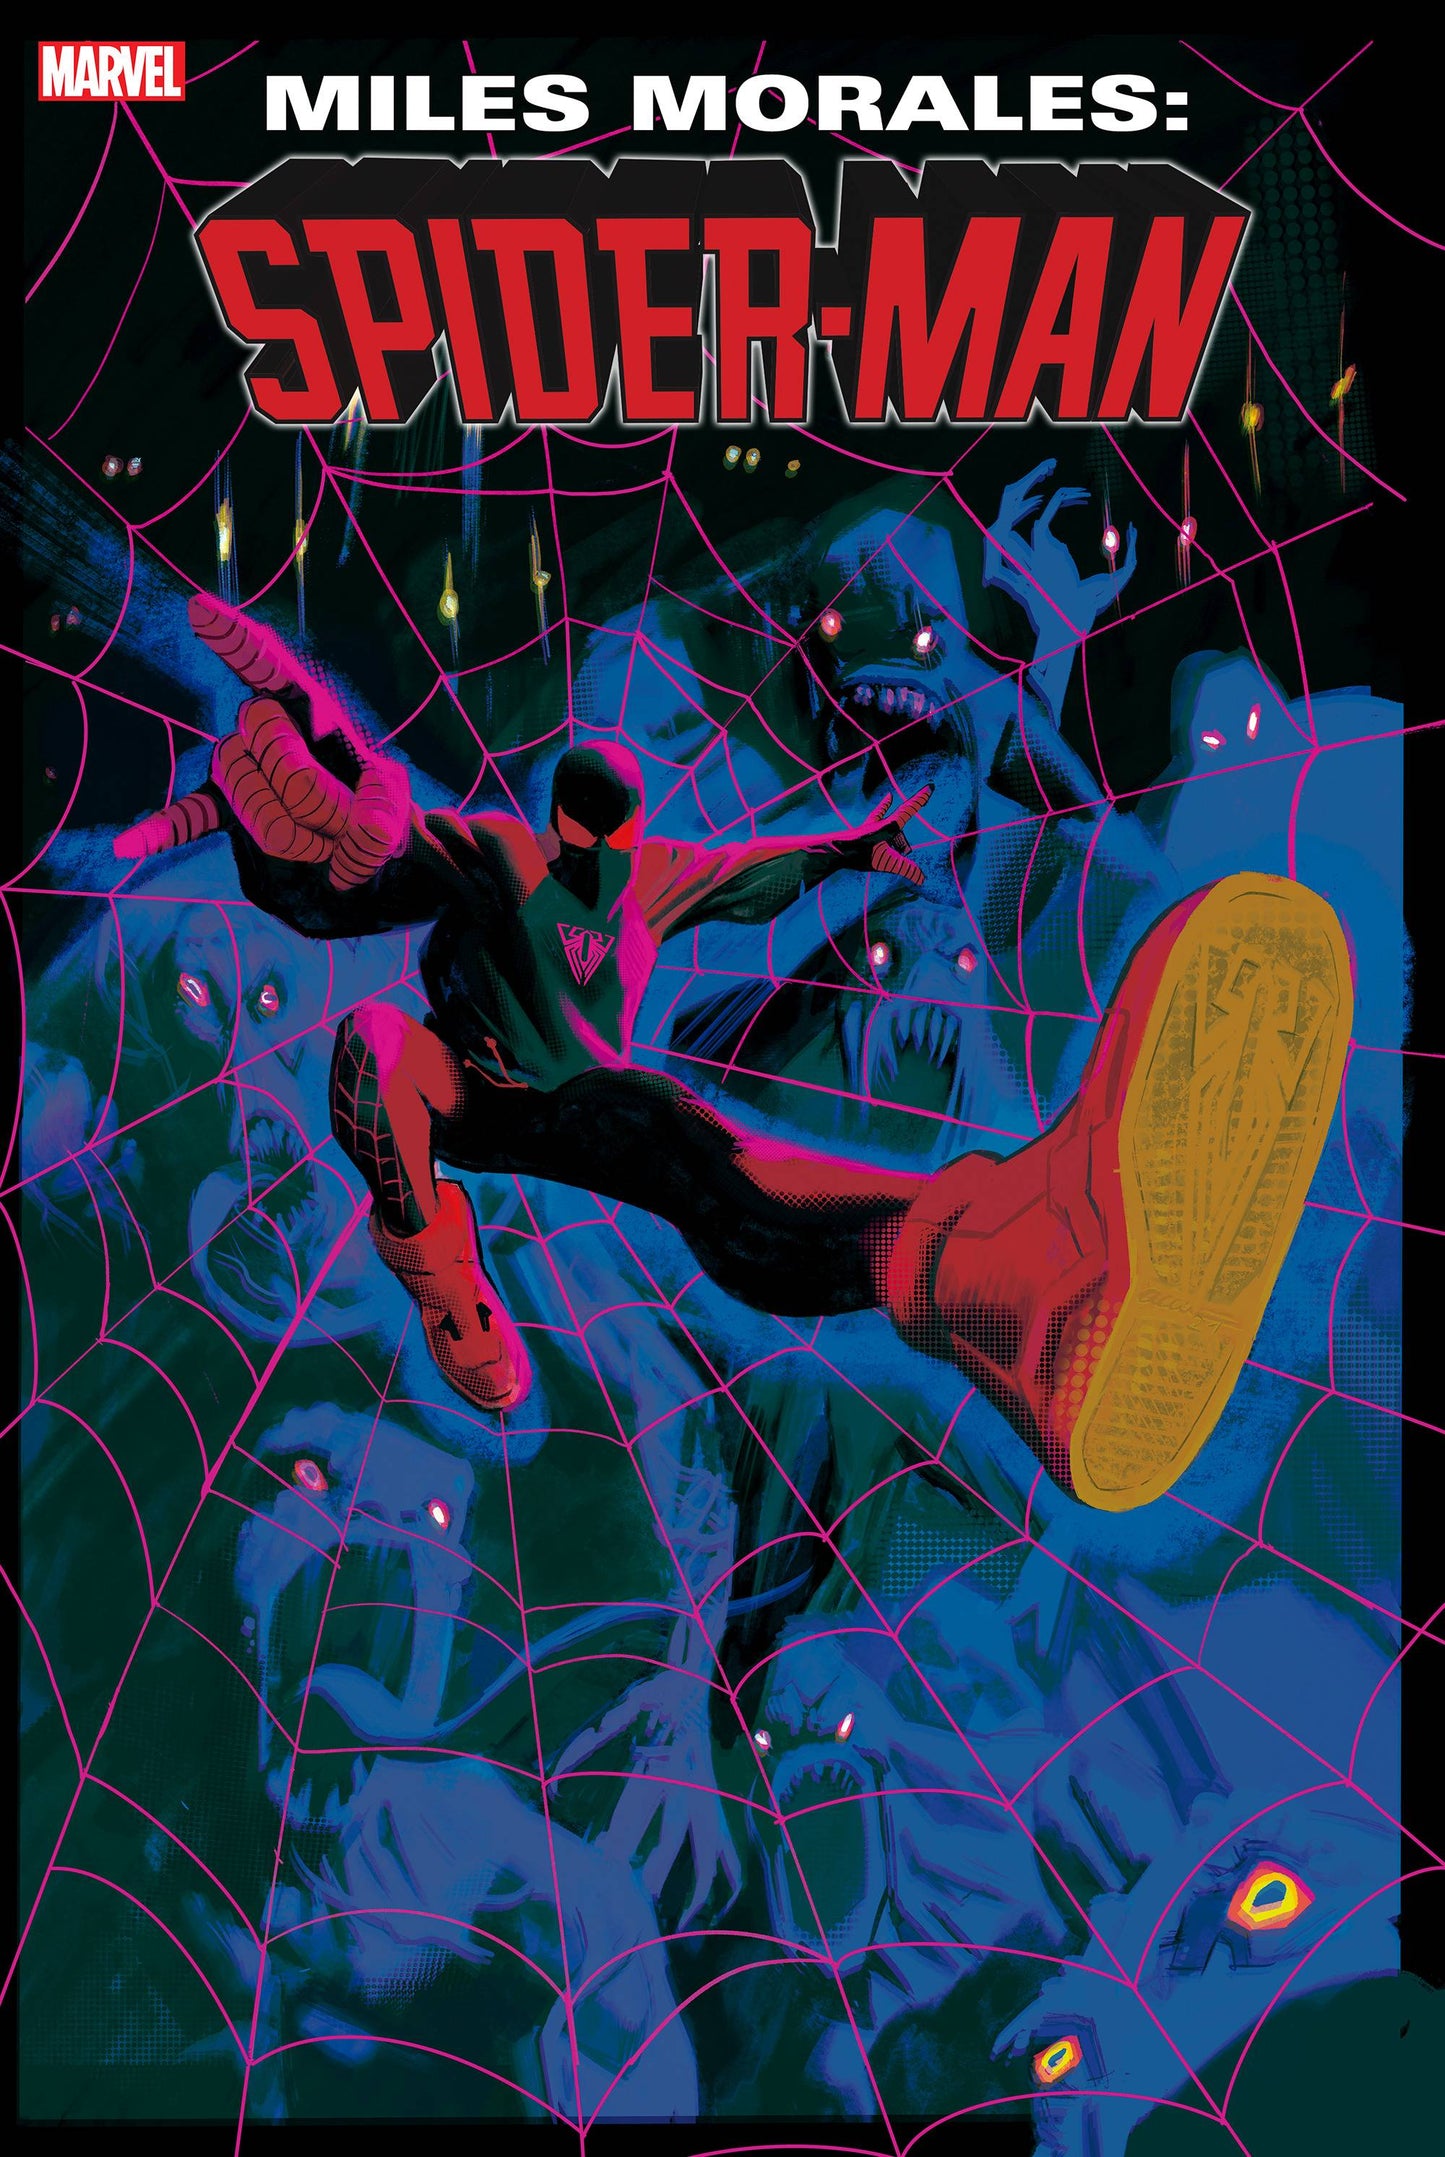 Miles Morales: Spider-Man (2018) #34